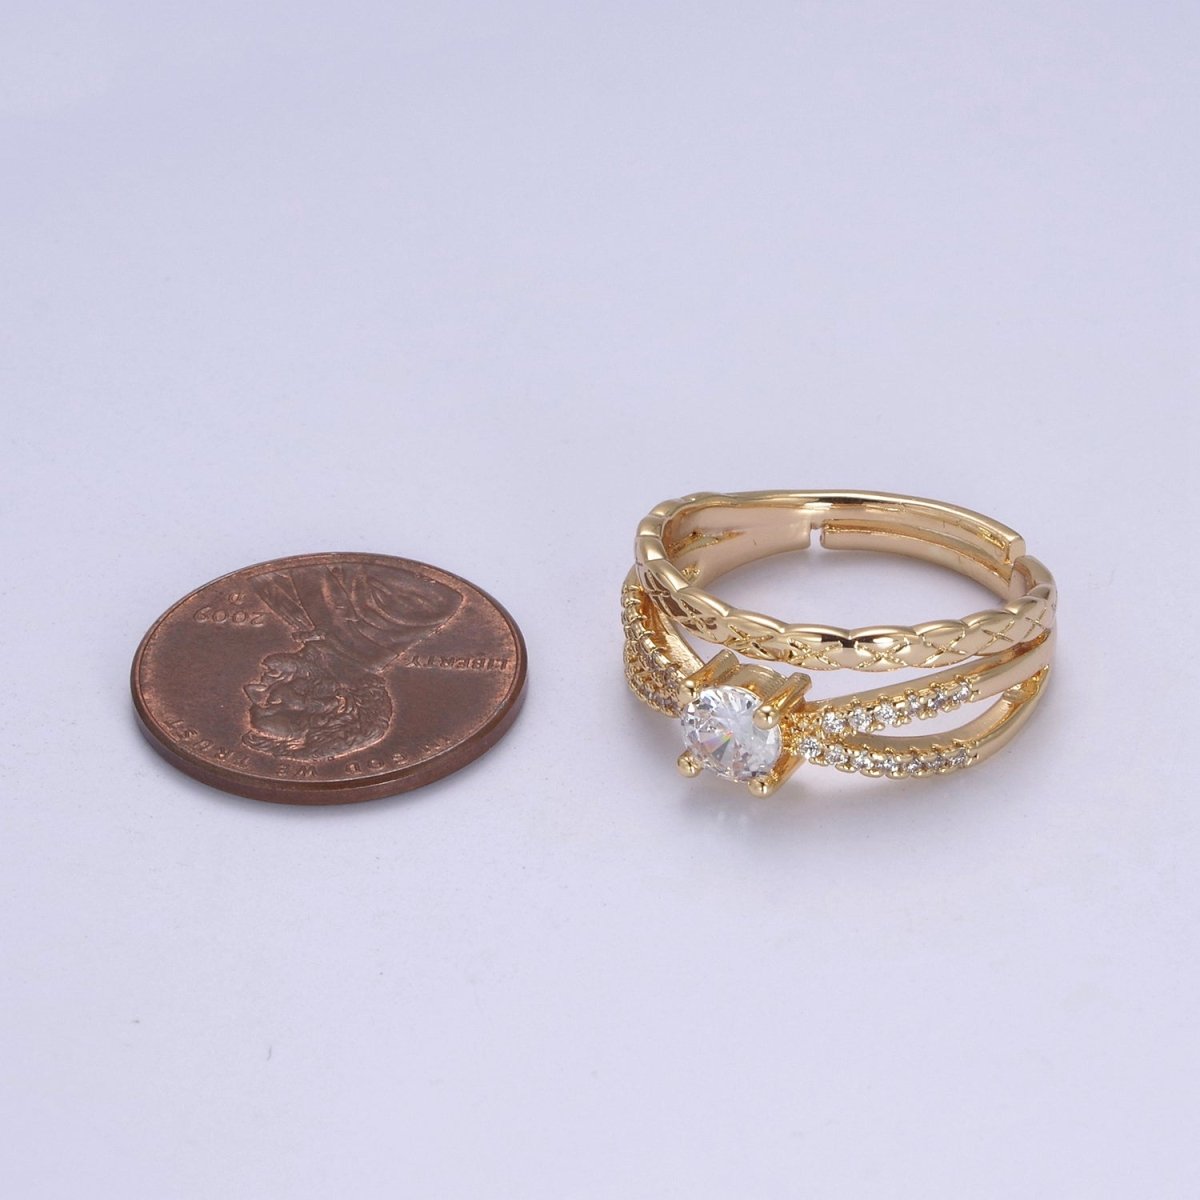 Triple Band Ring with Cubic Zirconia Stone Adjustable Jewelry U-307 - DLUXCA